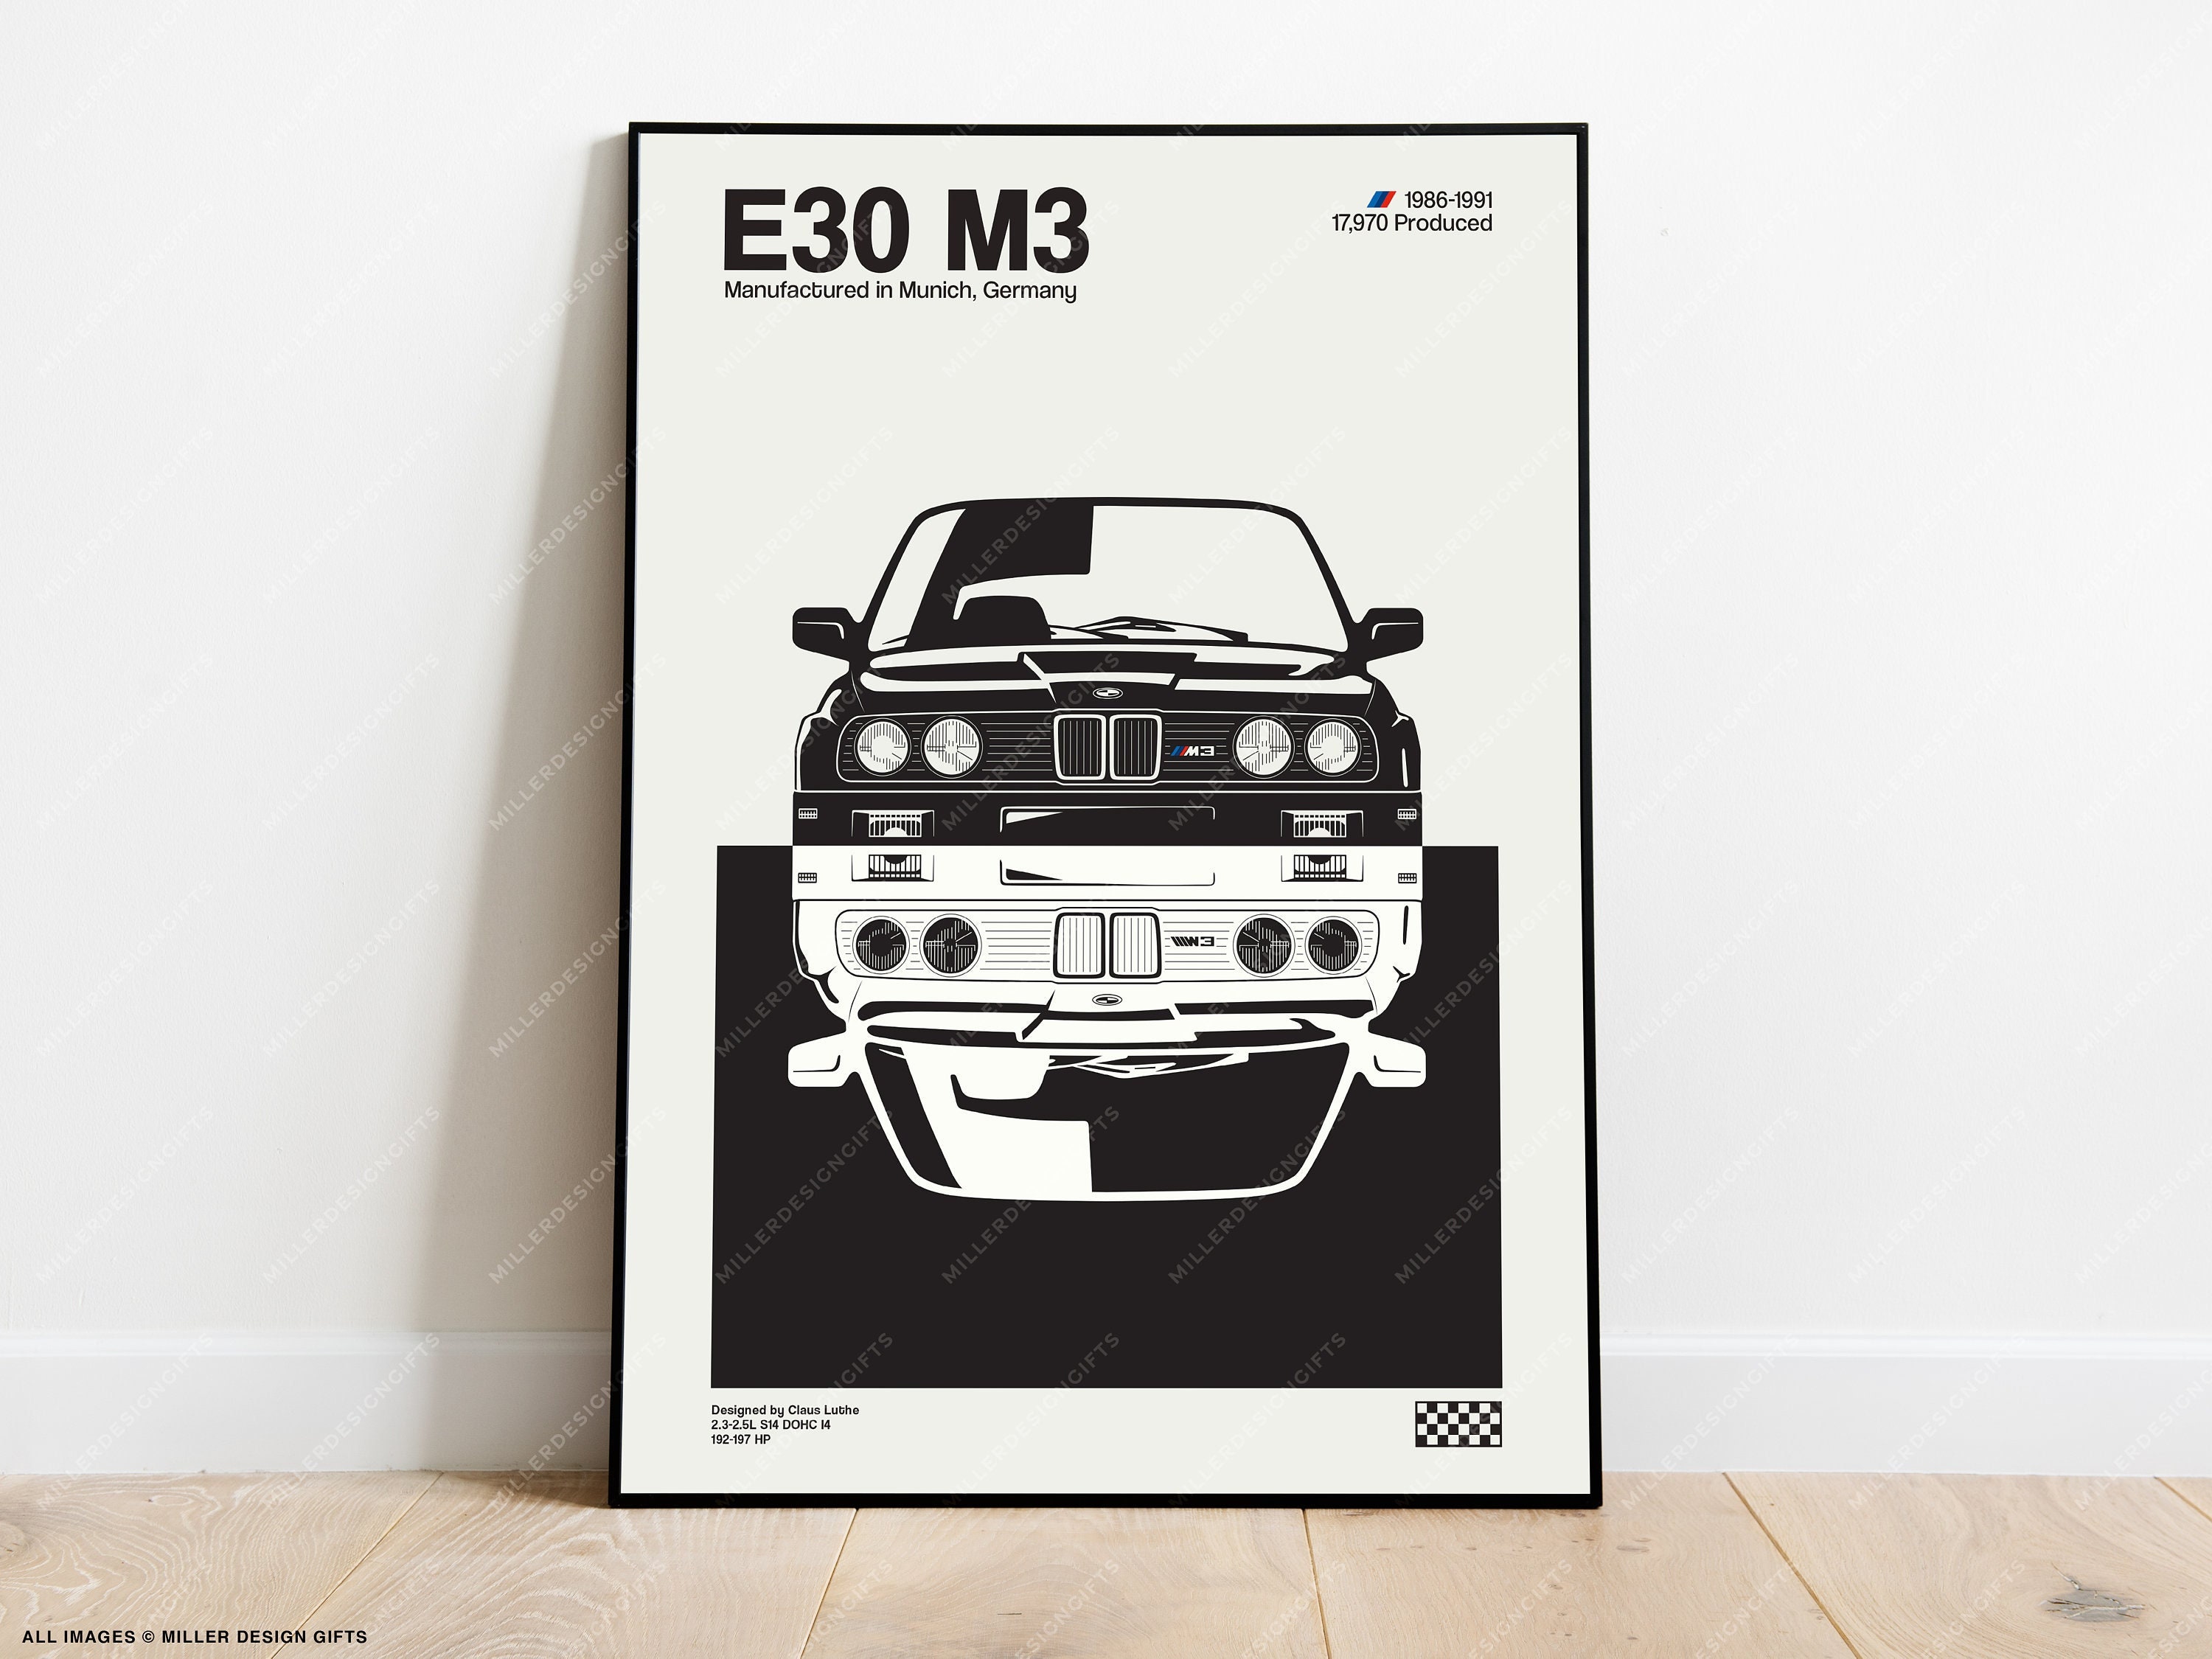 Indoor car cover fits BMW M3 E30 1986-1991 € 150